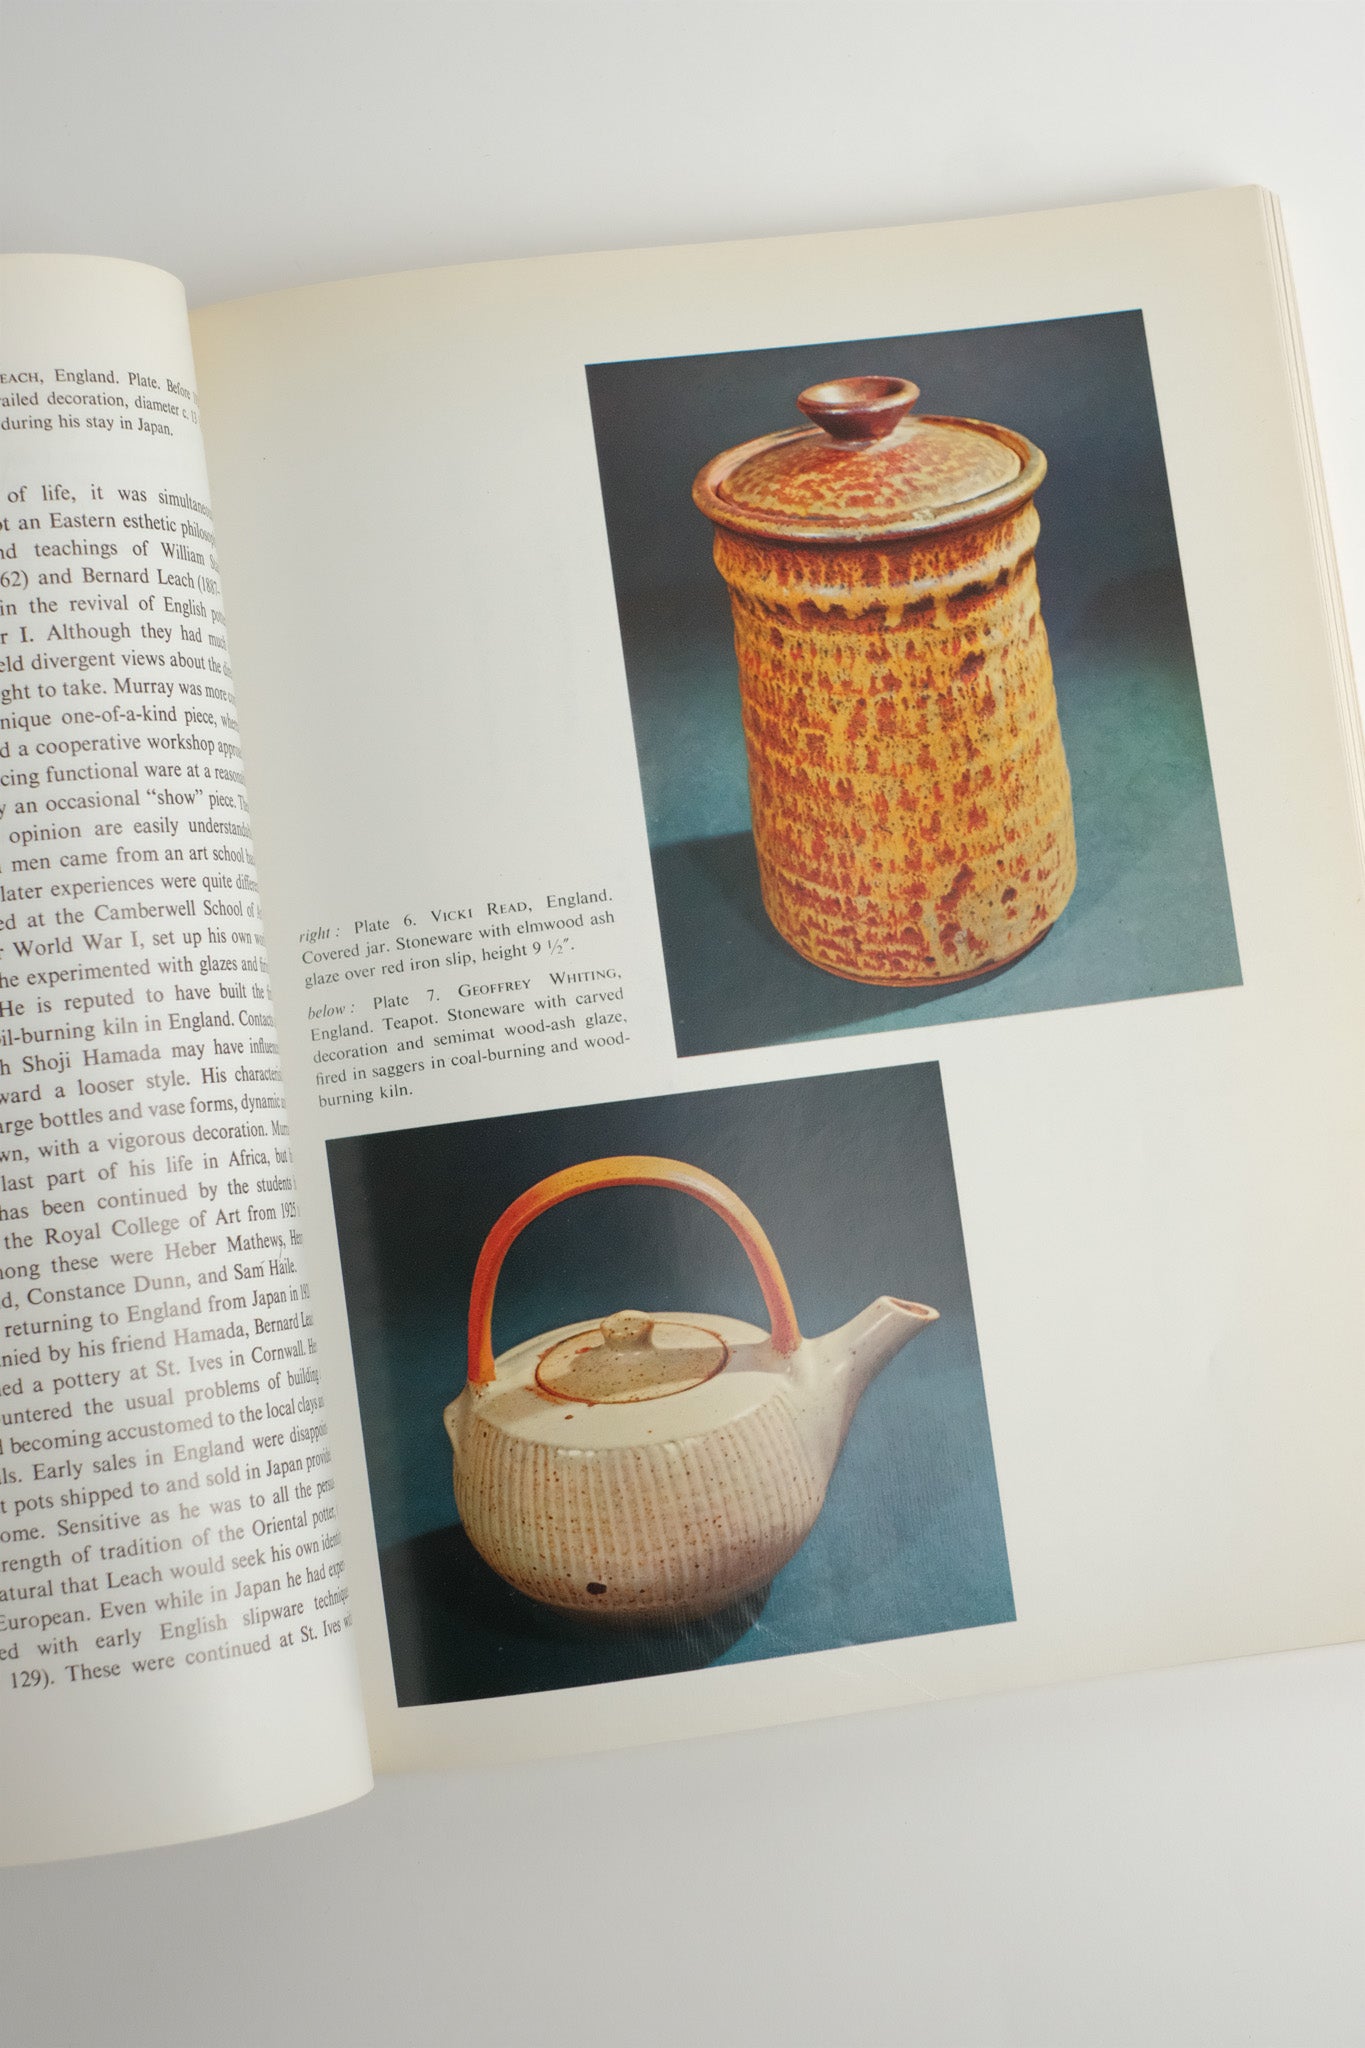 Ceramics - A Potter's Handbook - Vintage